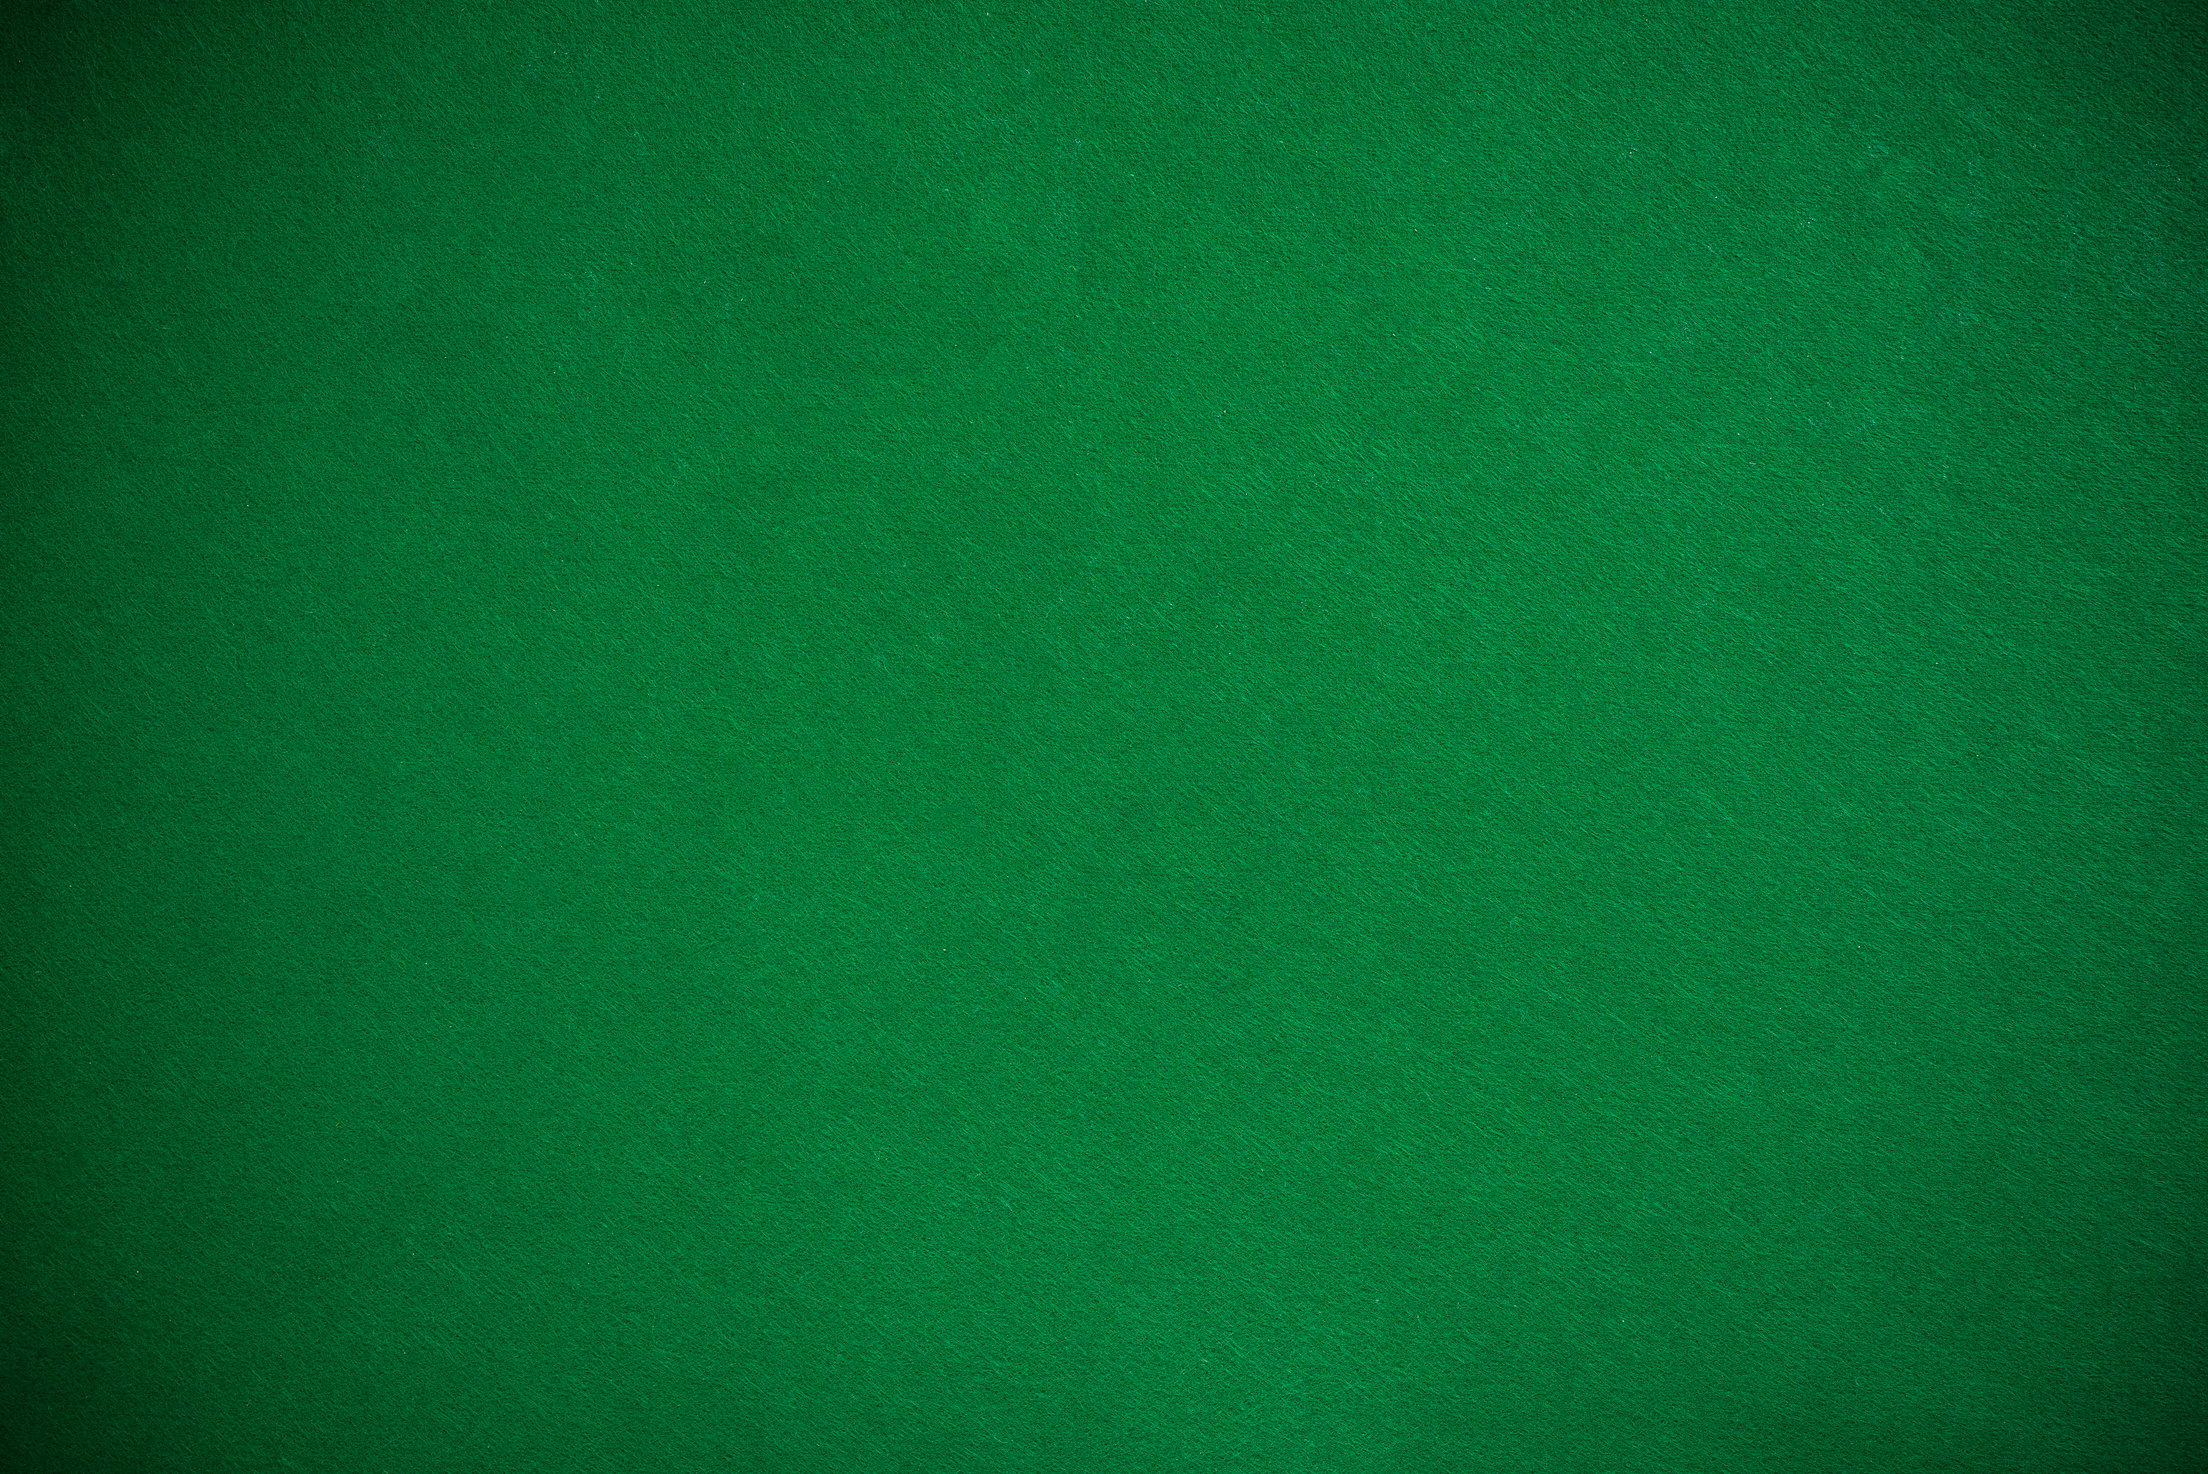 Emty Green Cloth Poker Table